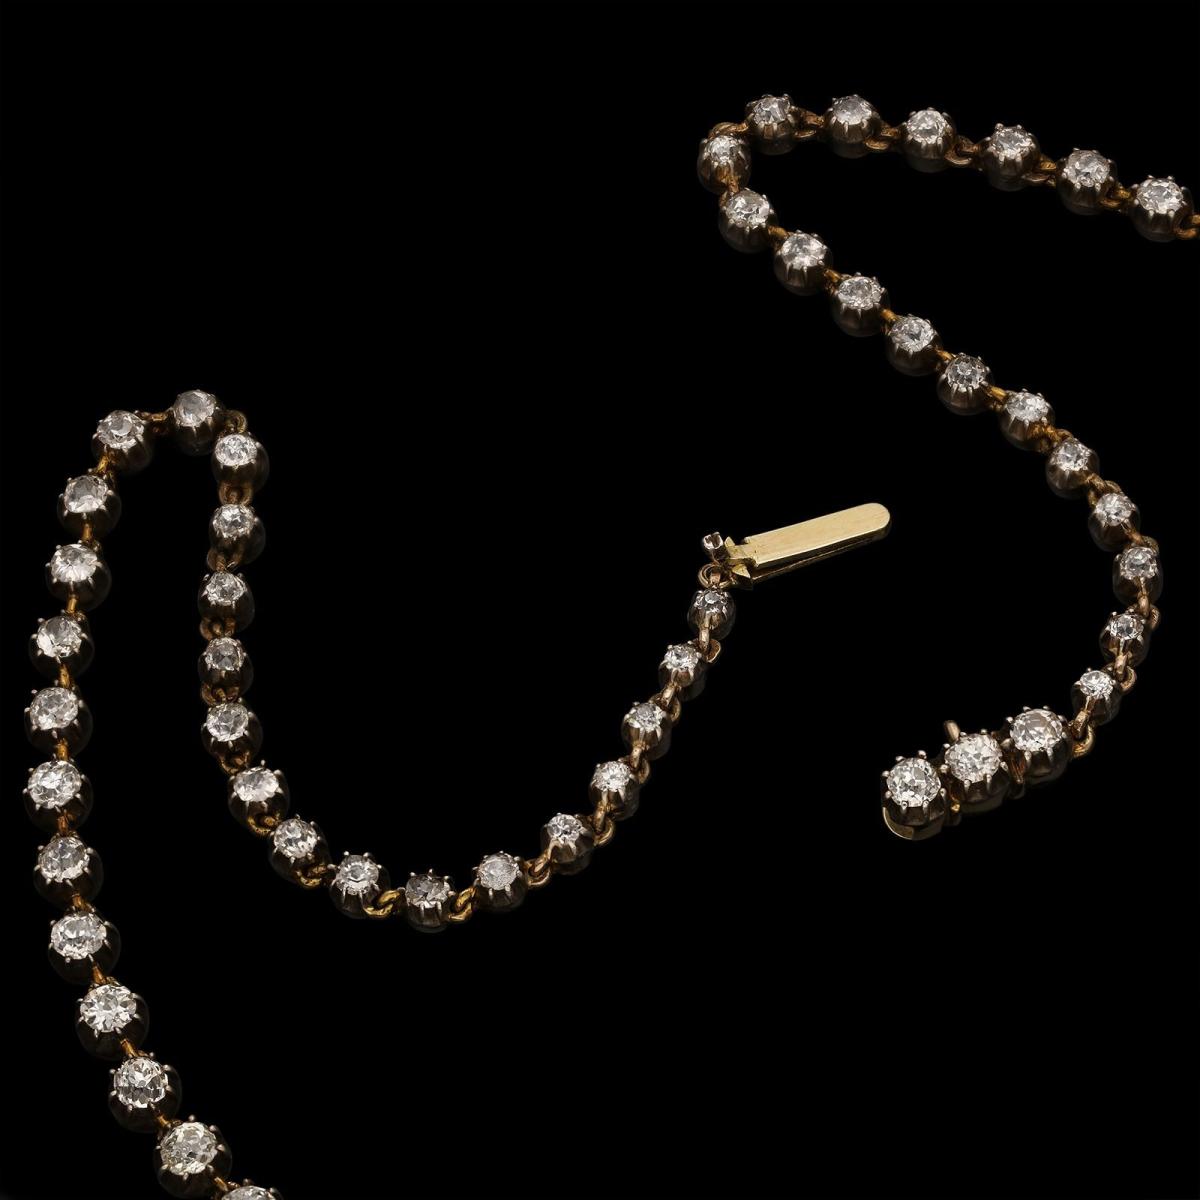 Victorian rivière diamond necklace